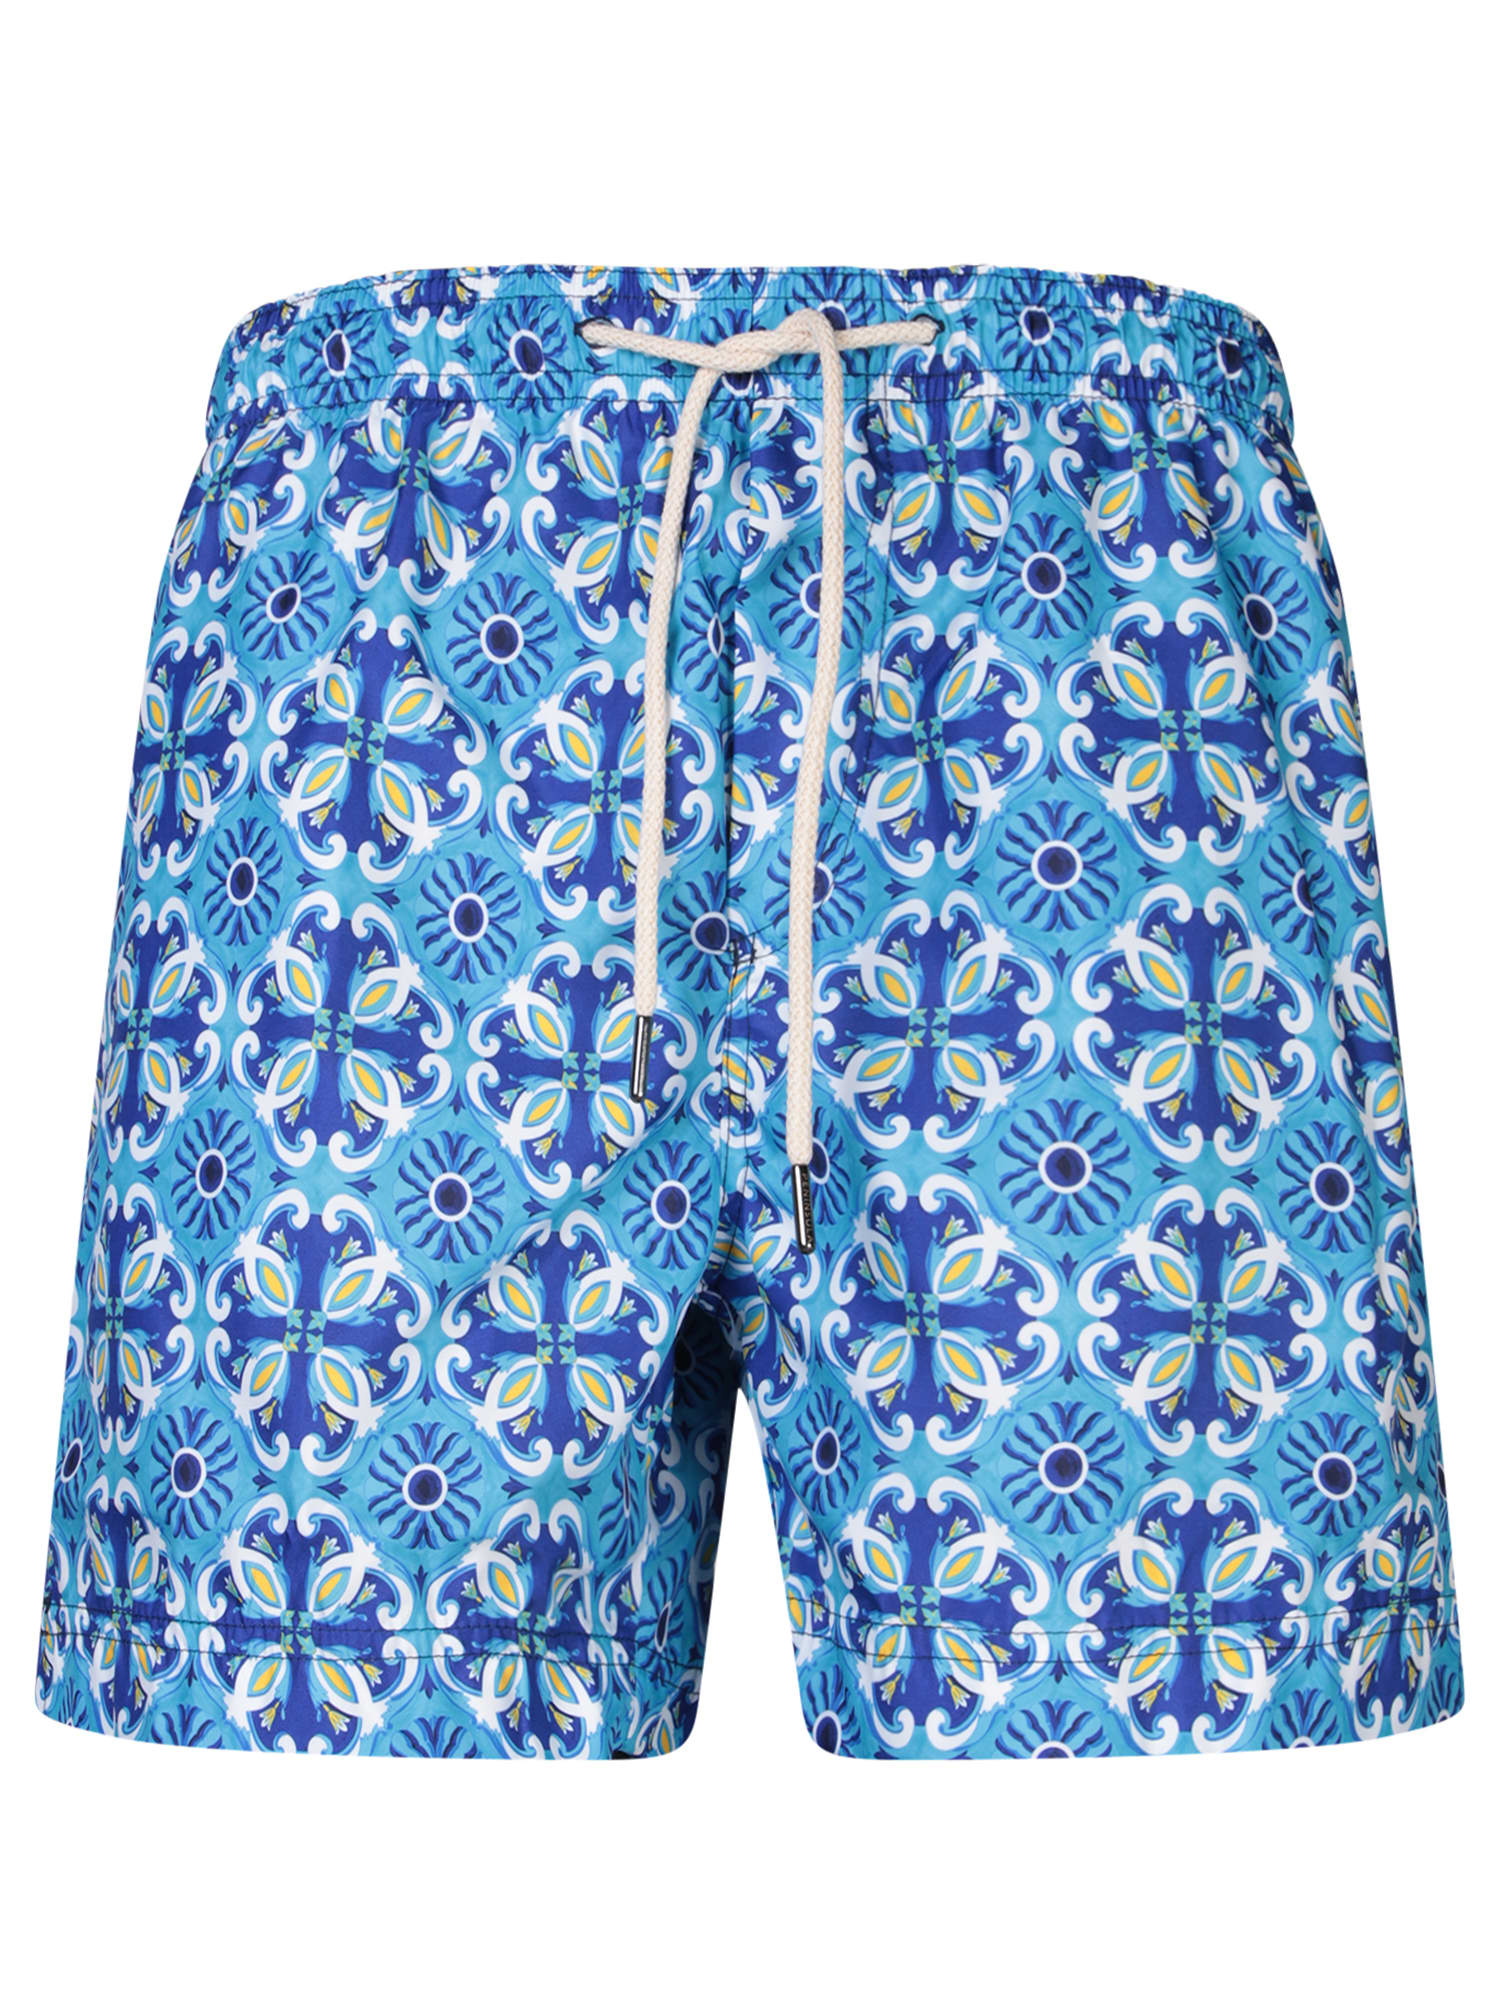 Patterned Blue Boxer Swim Shorts By Peninsula